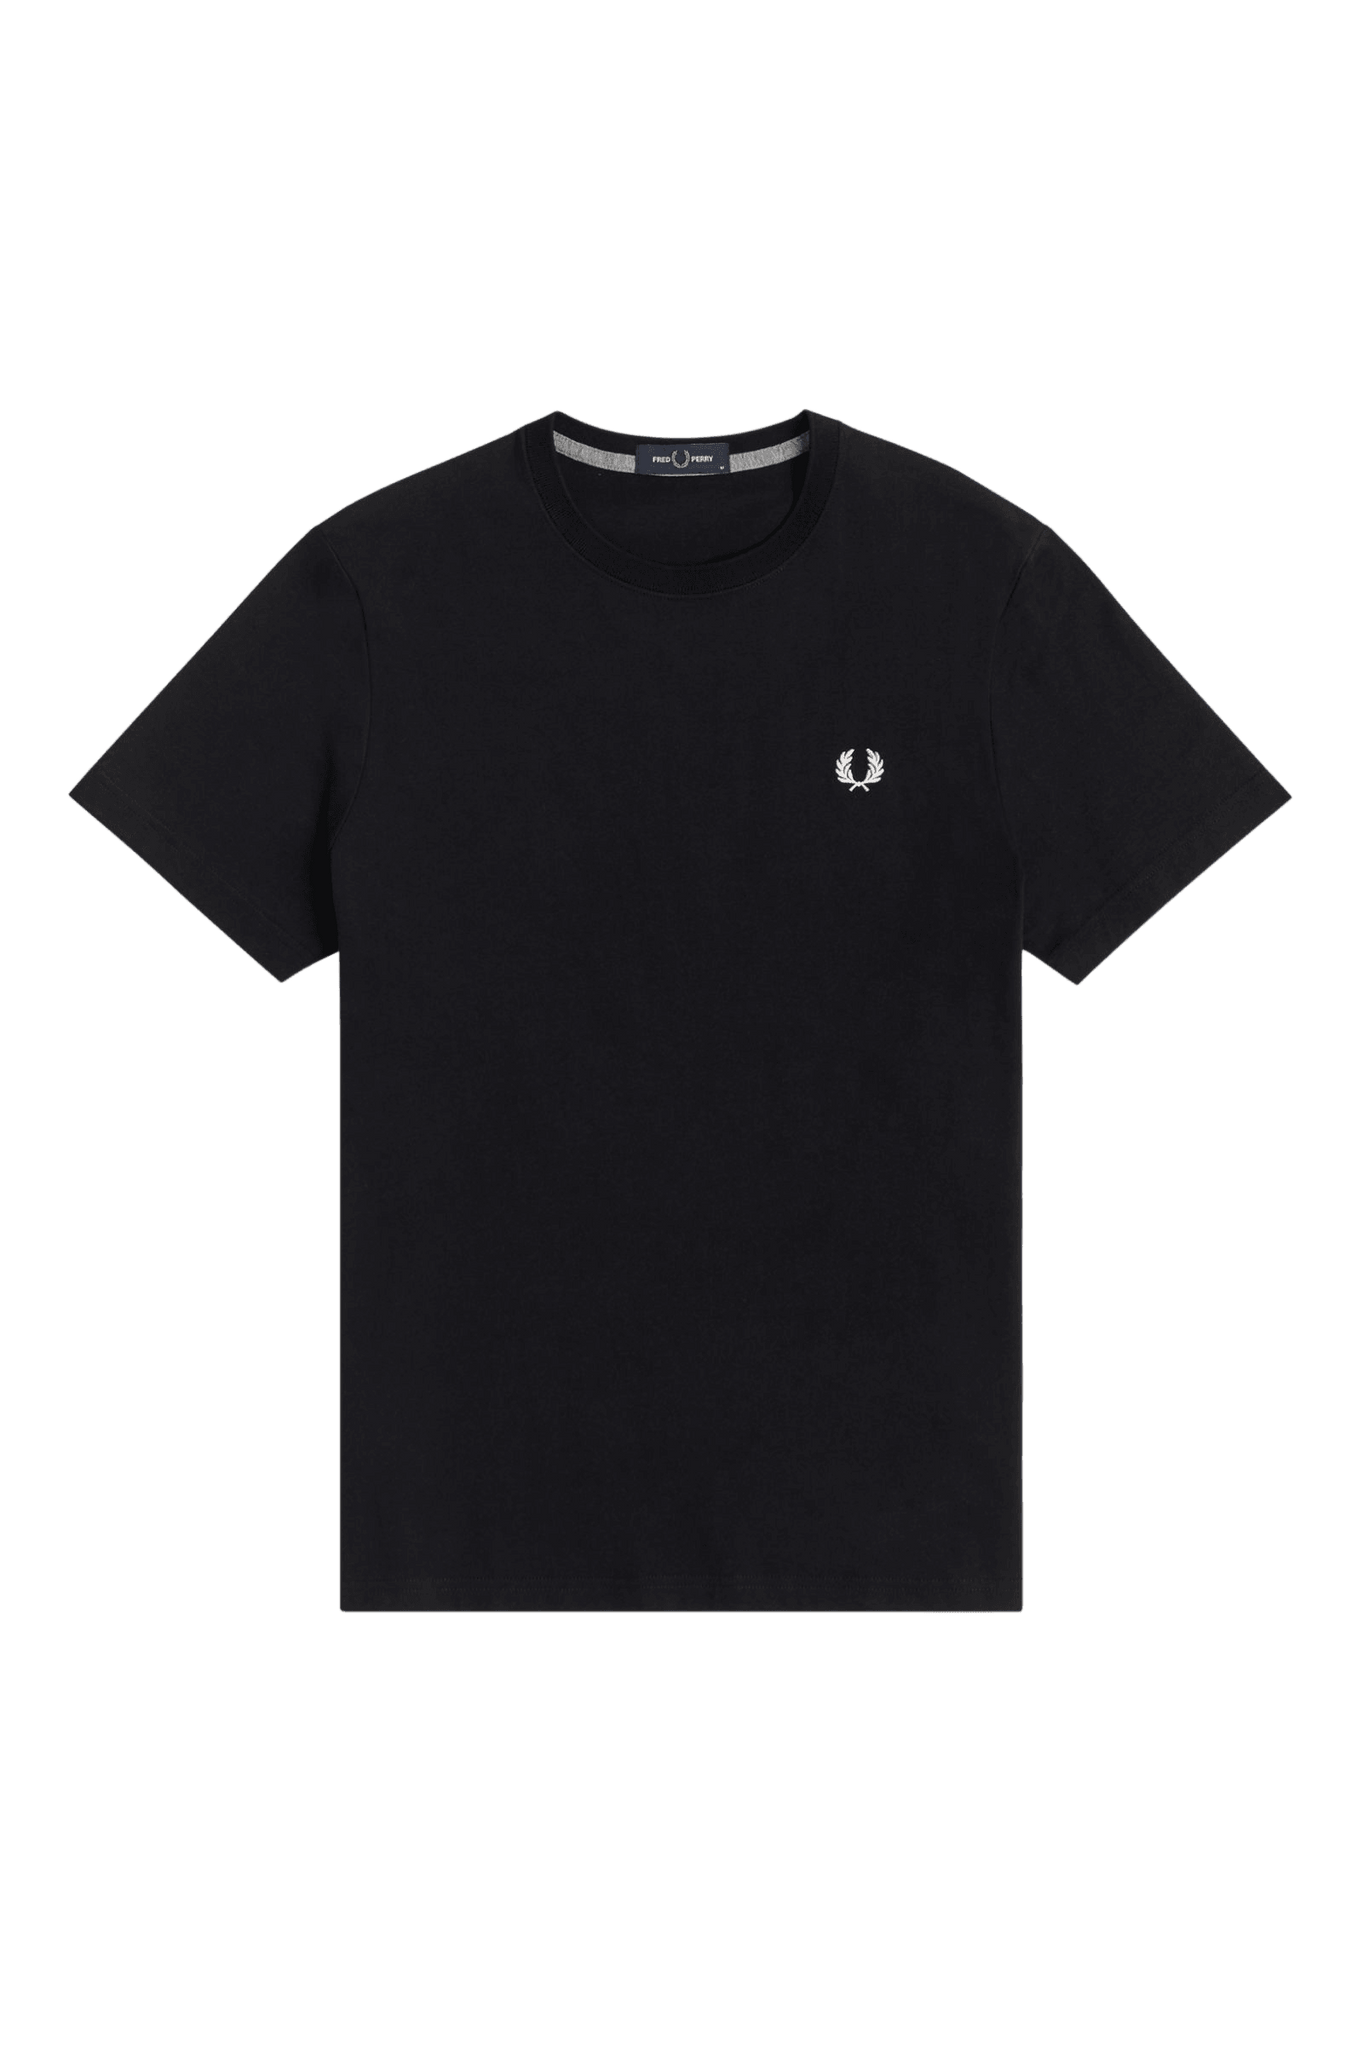 Camiseta Fred Perry M1600 Negra - ECRU